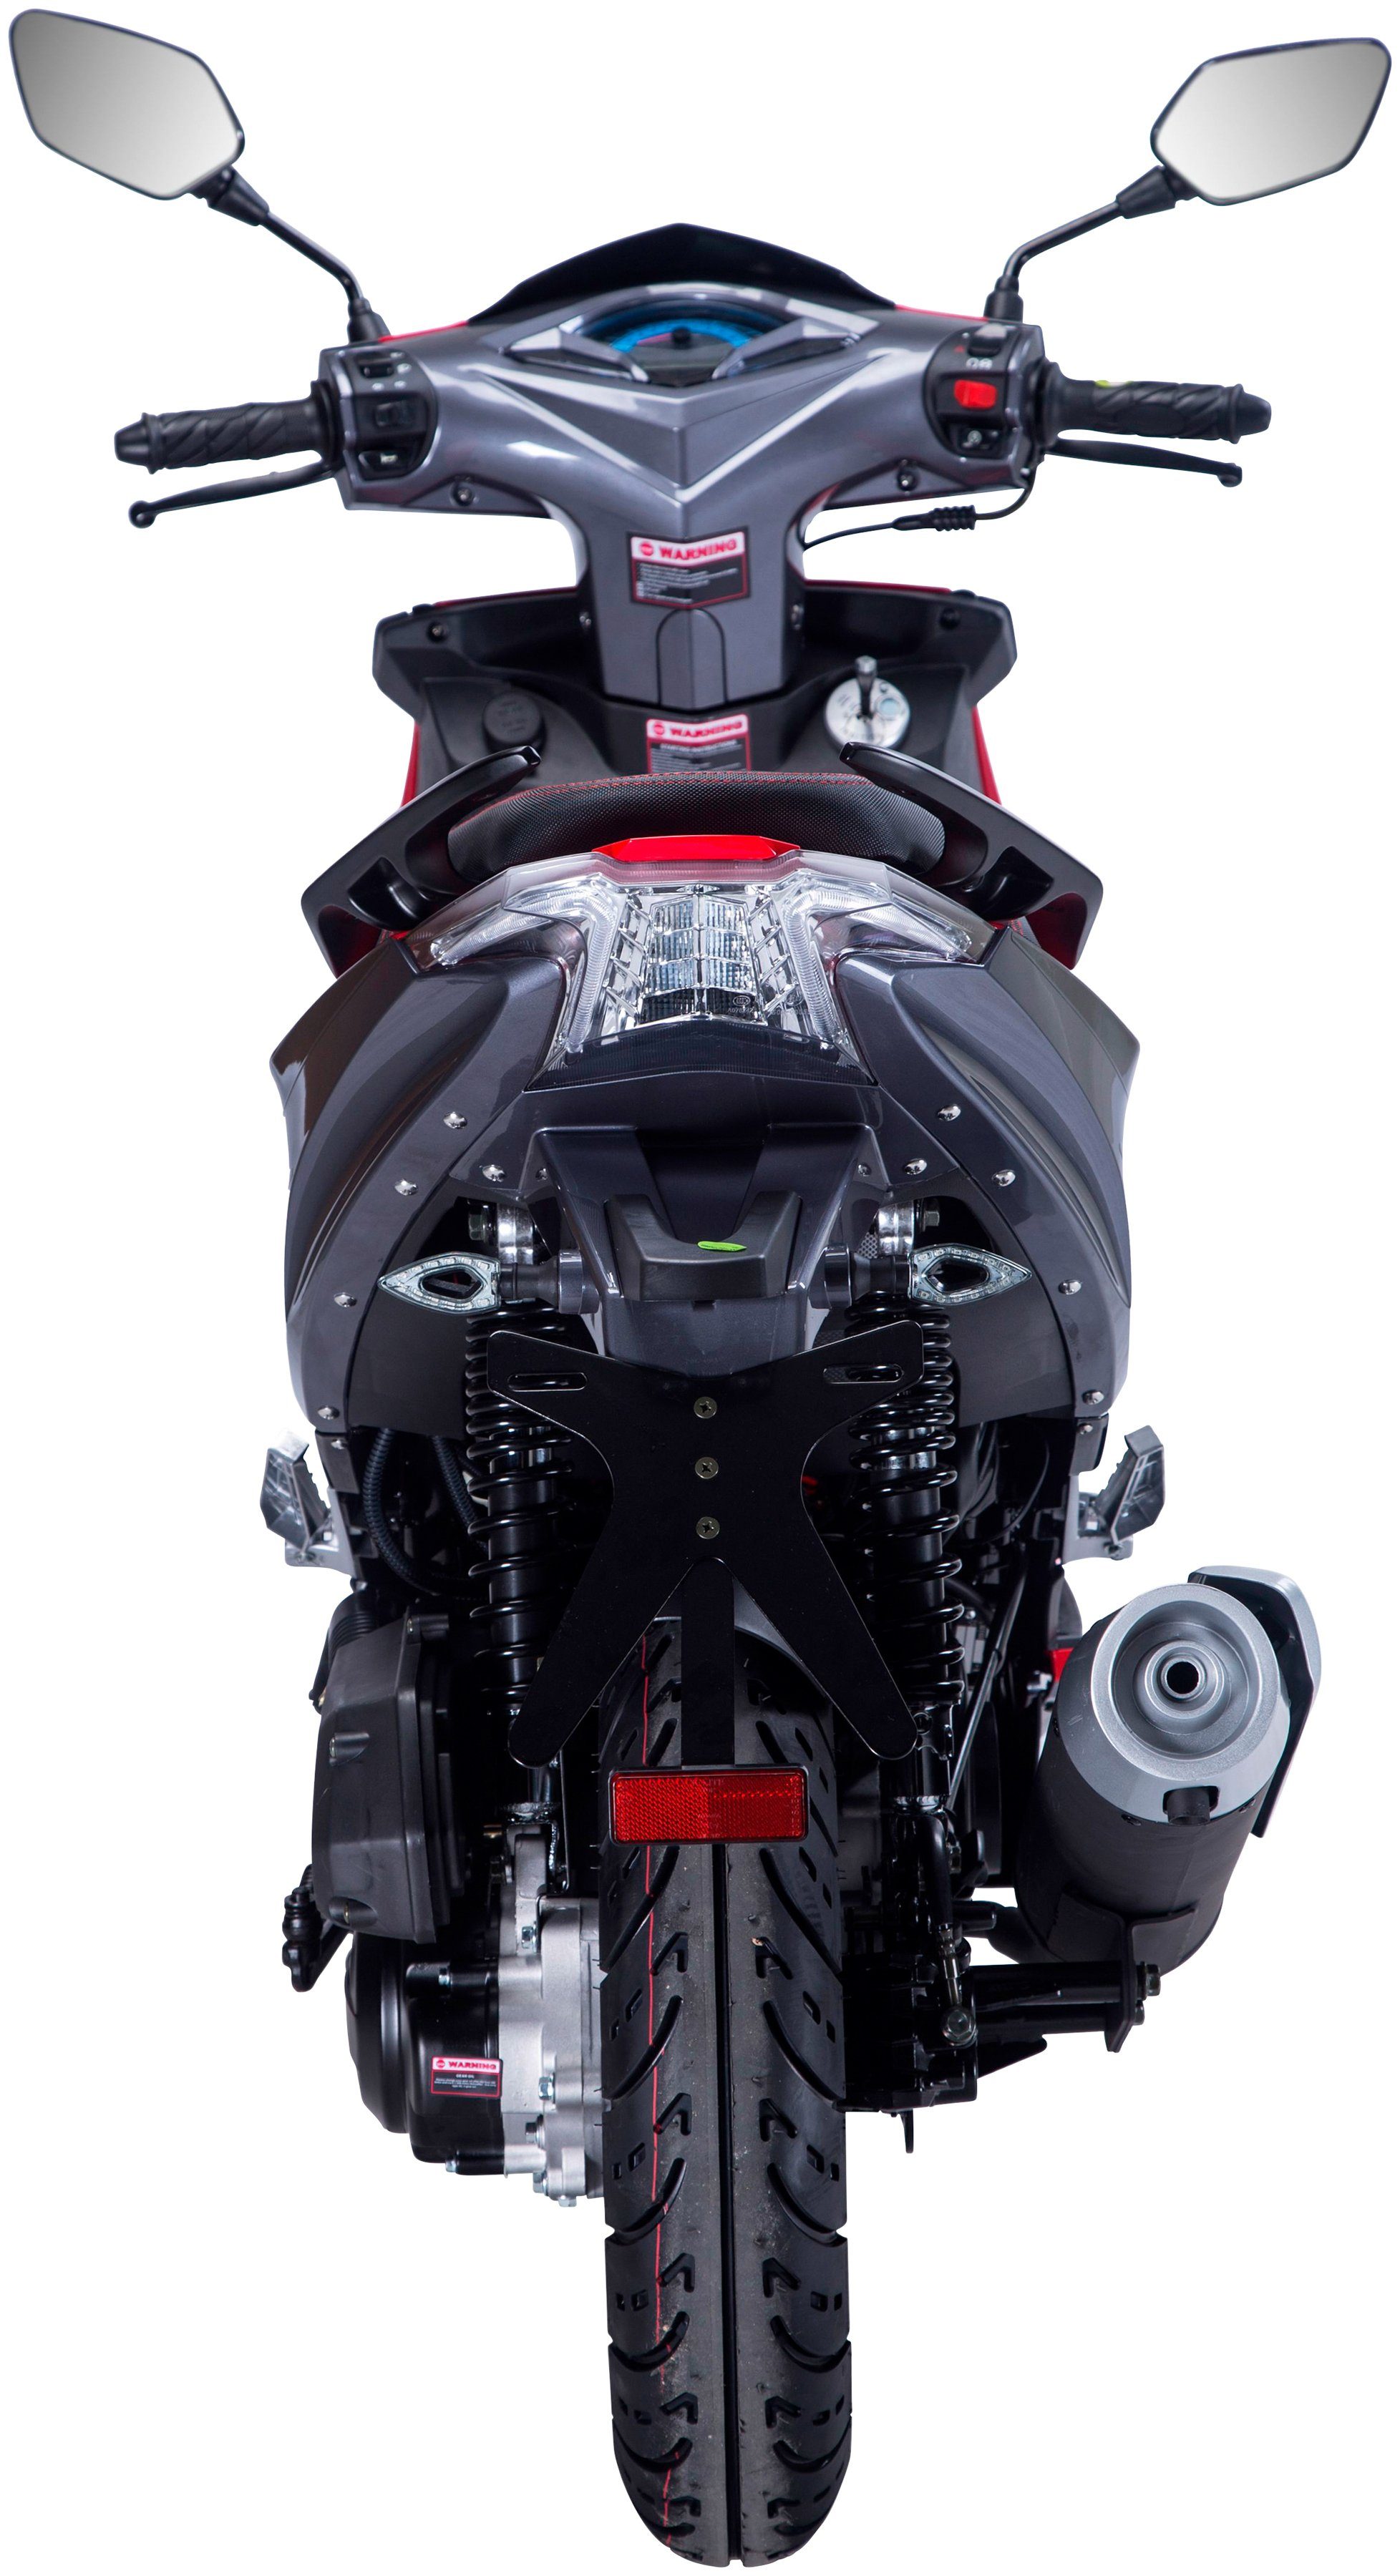 GT UNION Motorroller Striker, 50 schwarz/rot 5 ccm, Euro km/h, 45